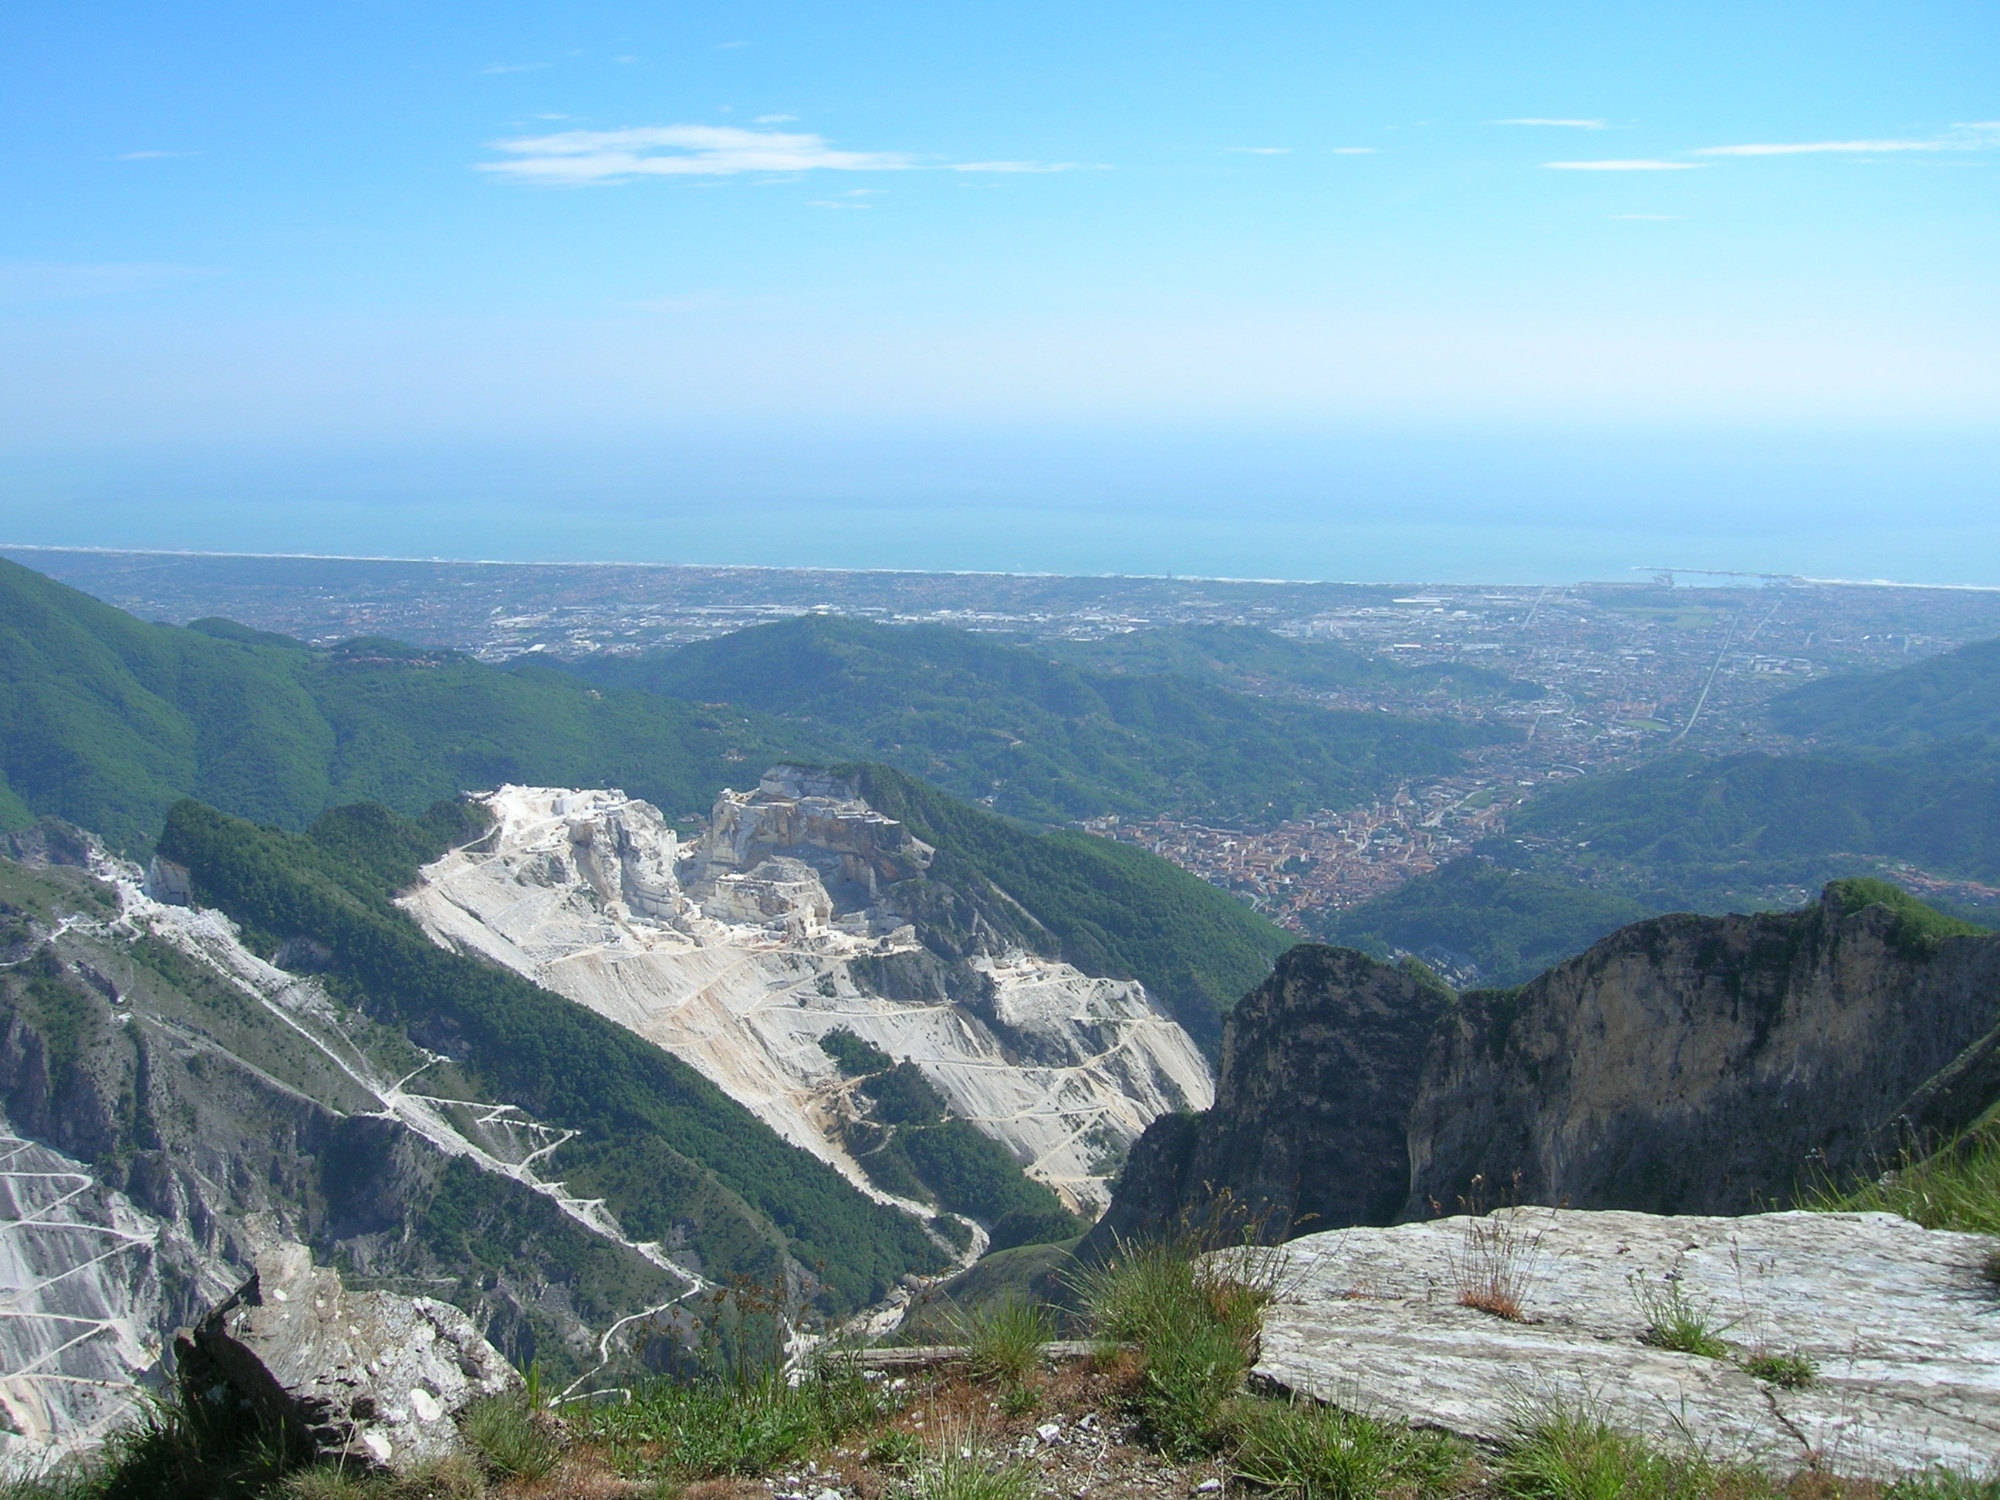 The marble quarries in Carrara